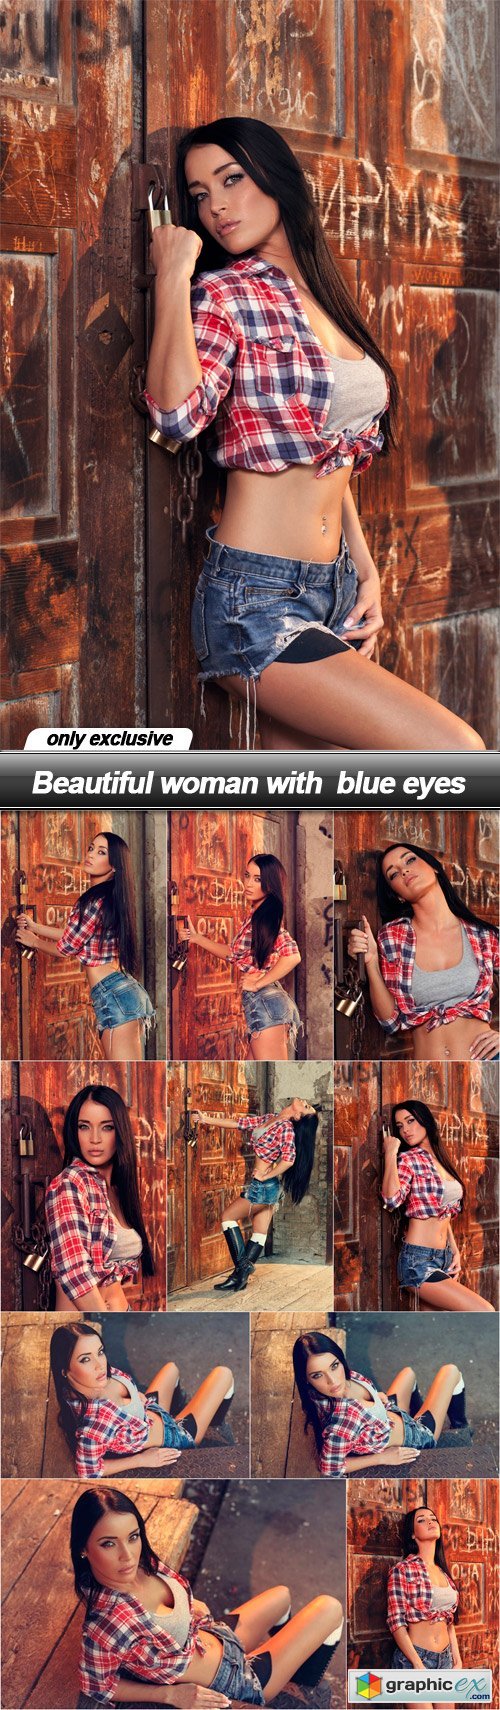 Beautiful woman with blue eyes - 10 UHQ JPEG